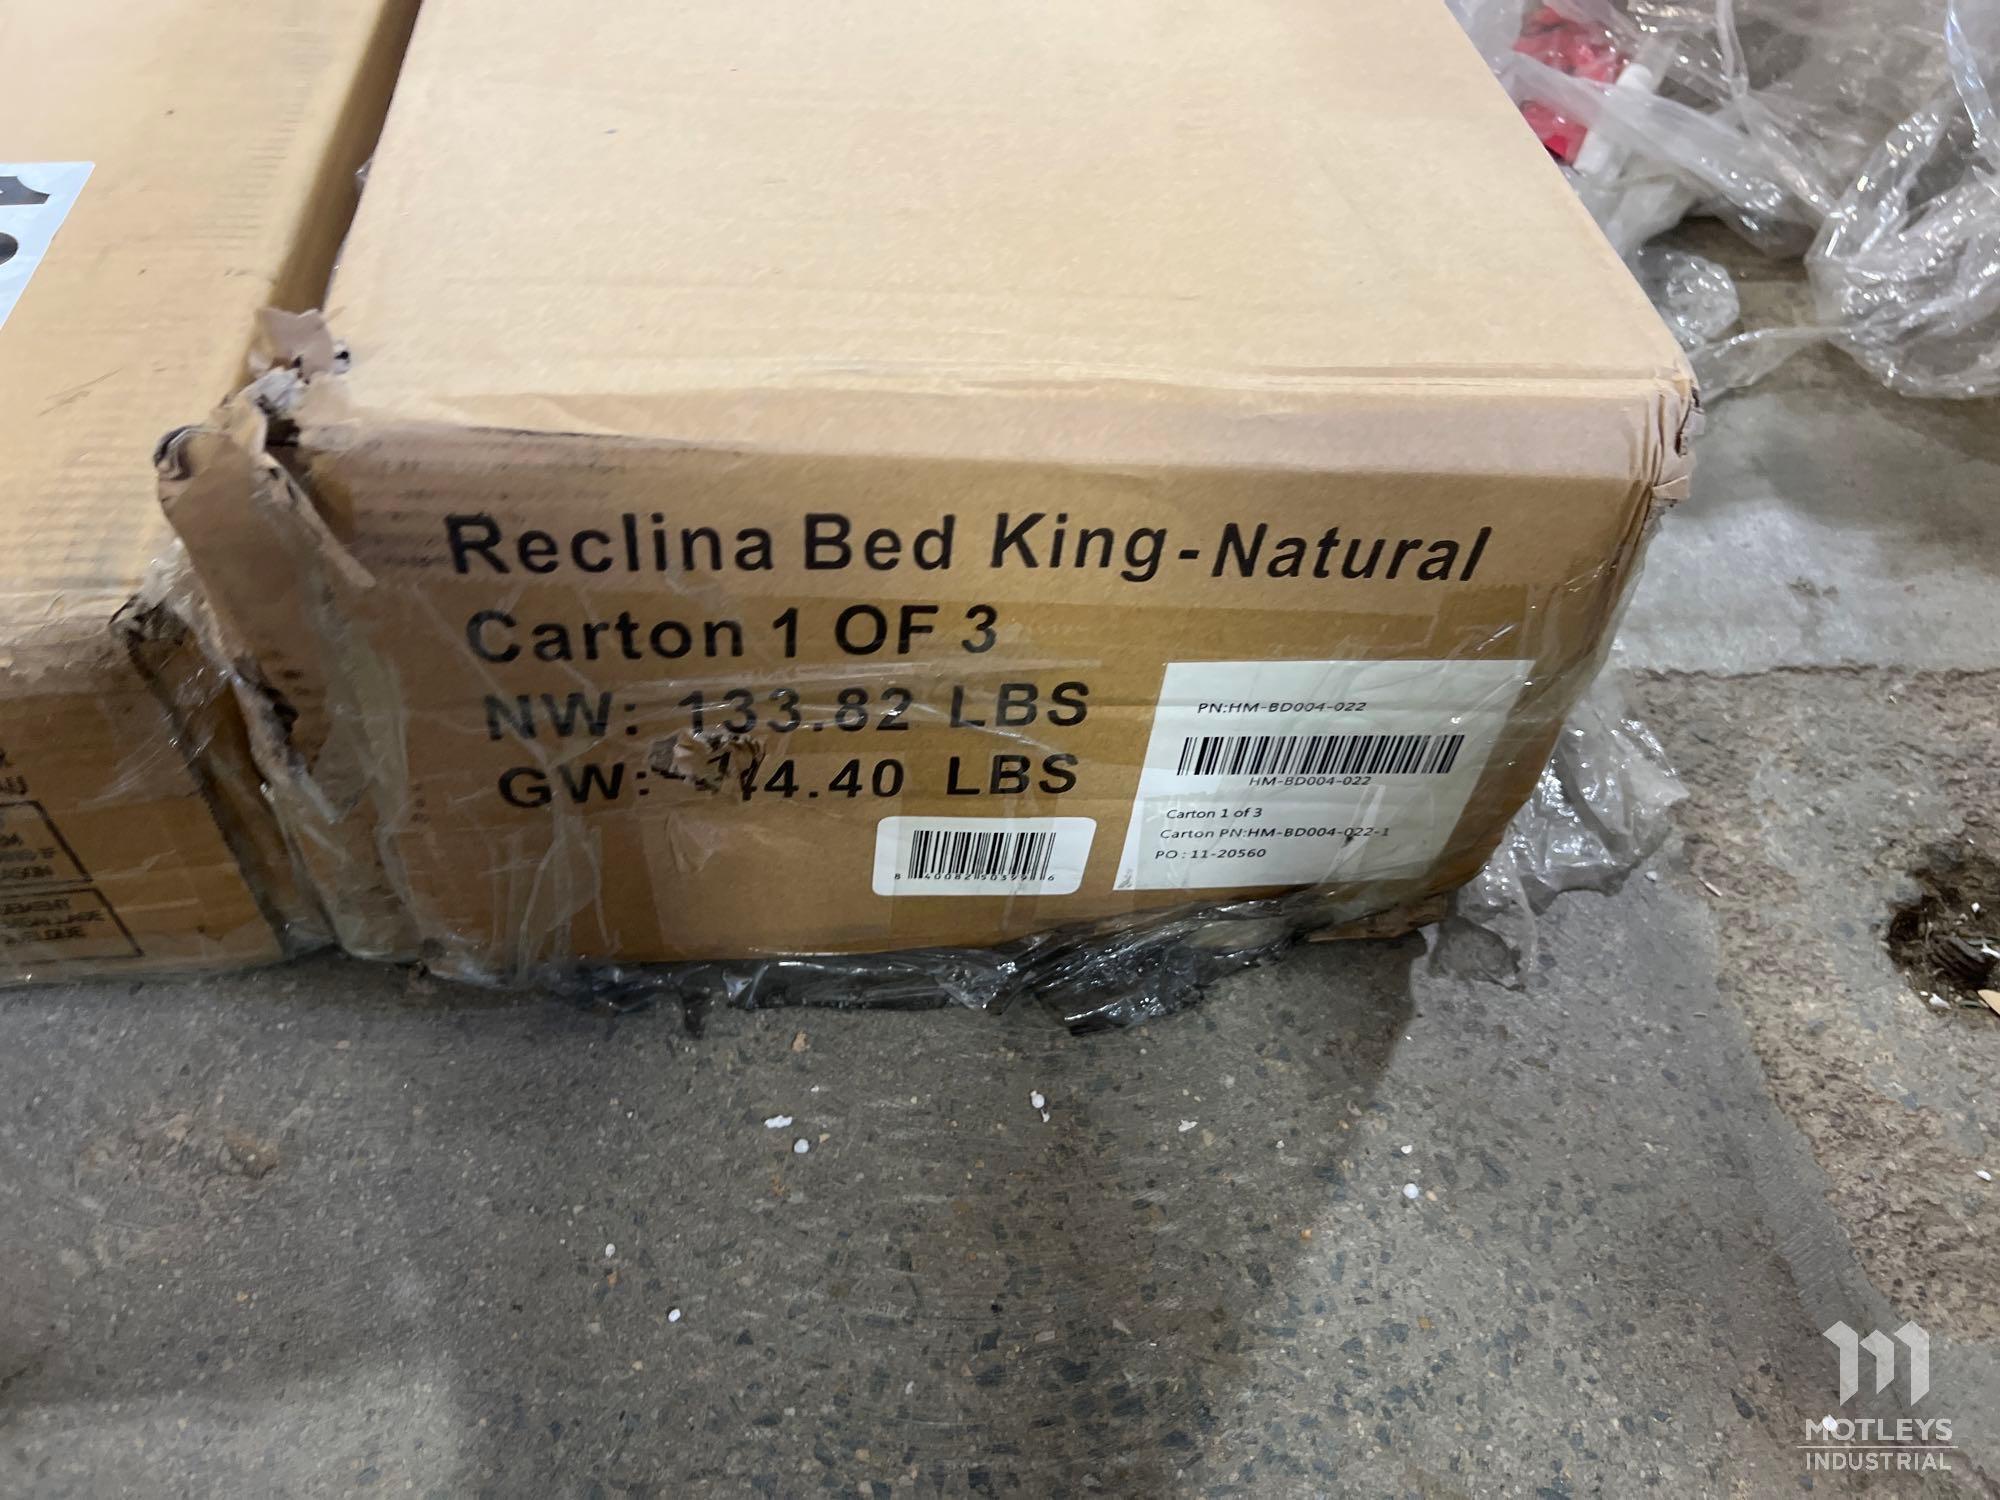 Koble King Reclina Bed